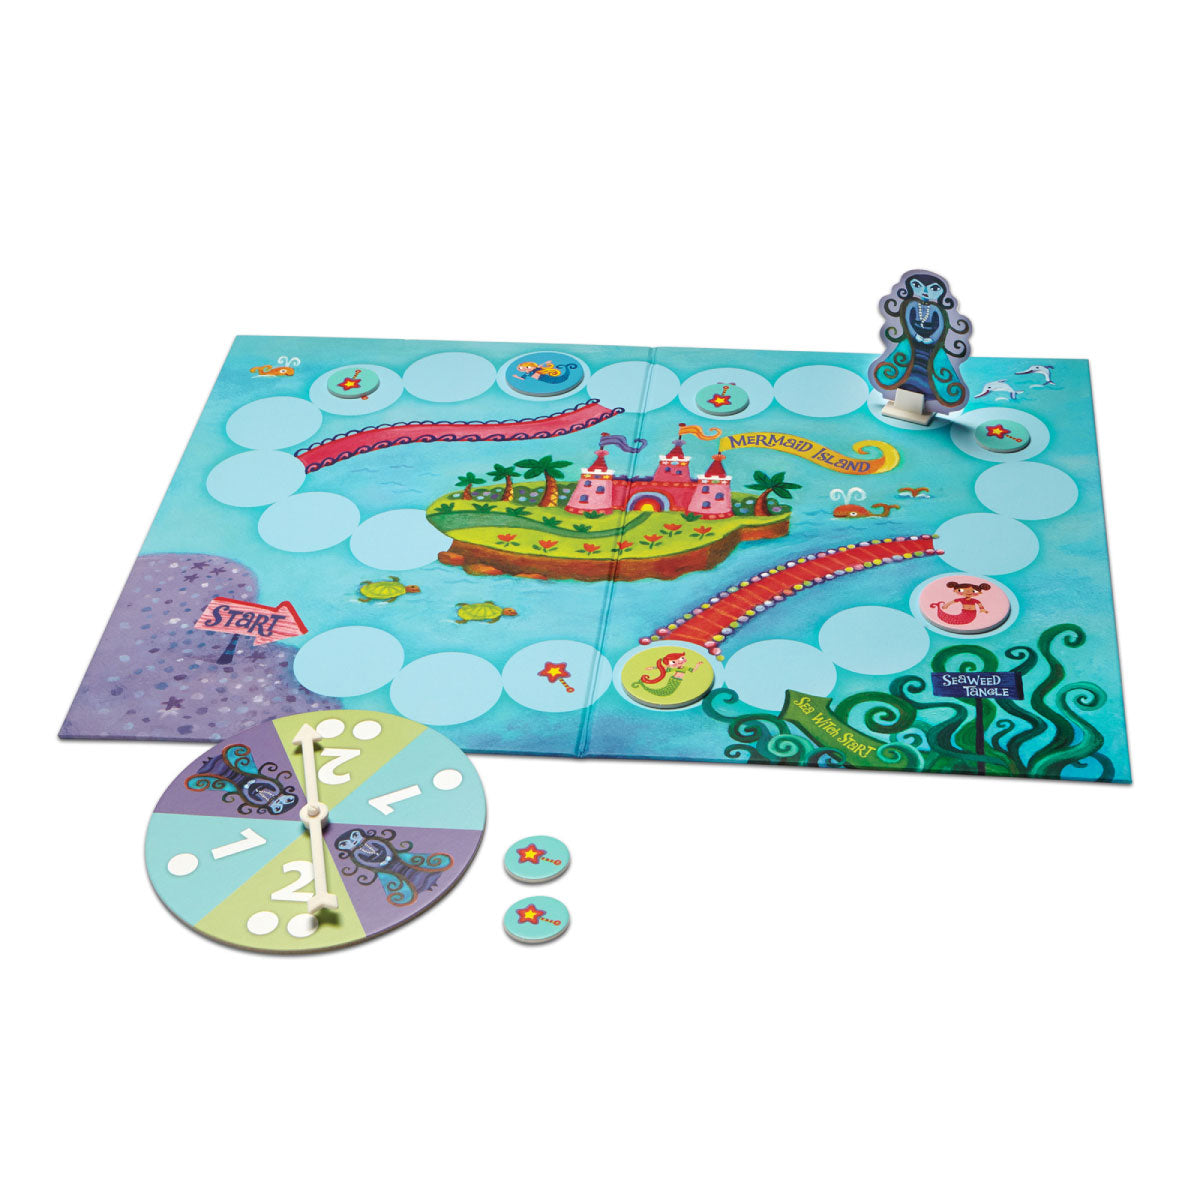 Peaceable Kingdom Mermaid Island Cooperative Game